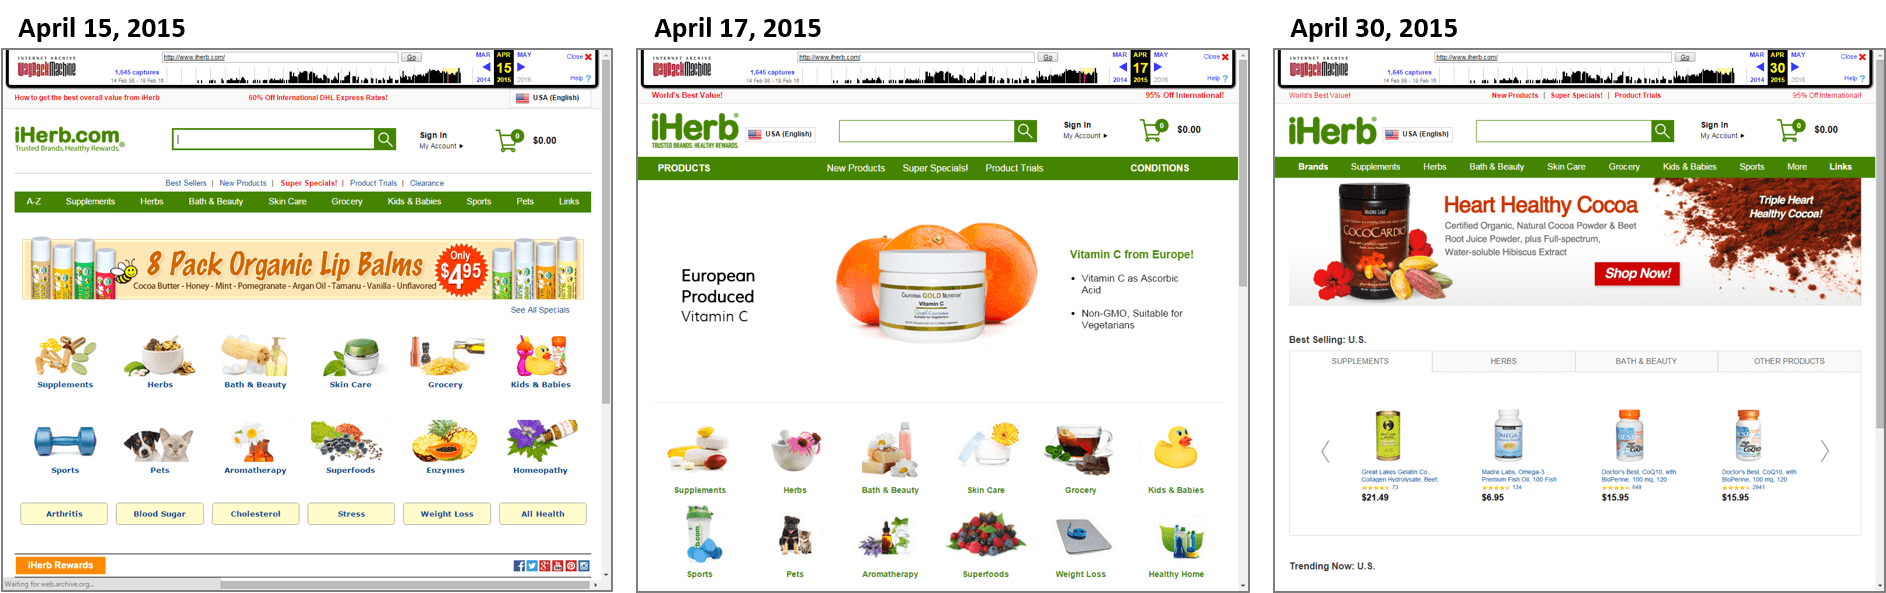 iherb.com homepage changes in April 2015